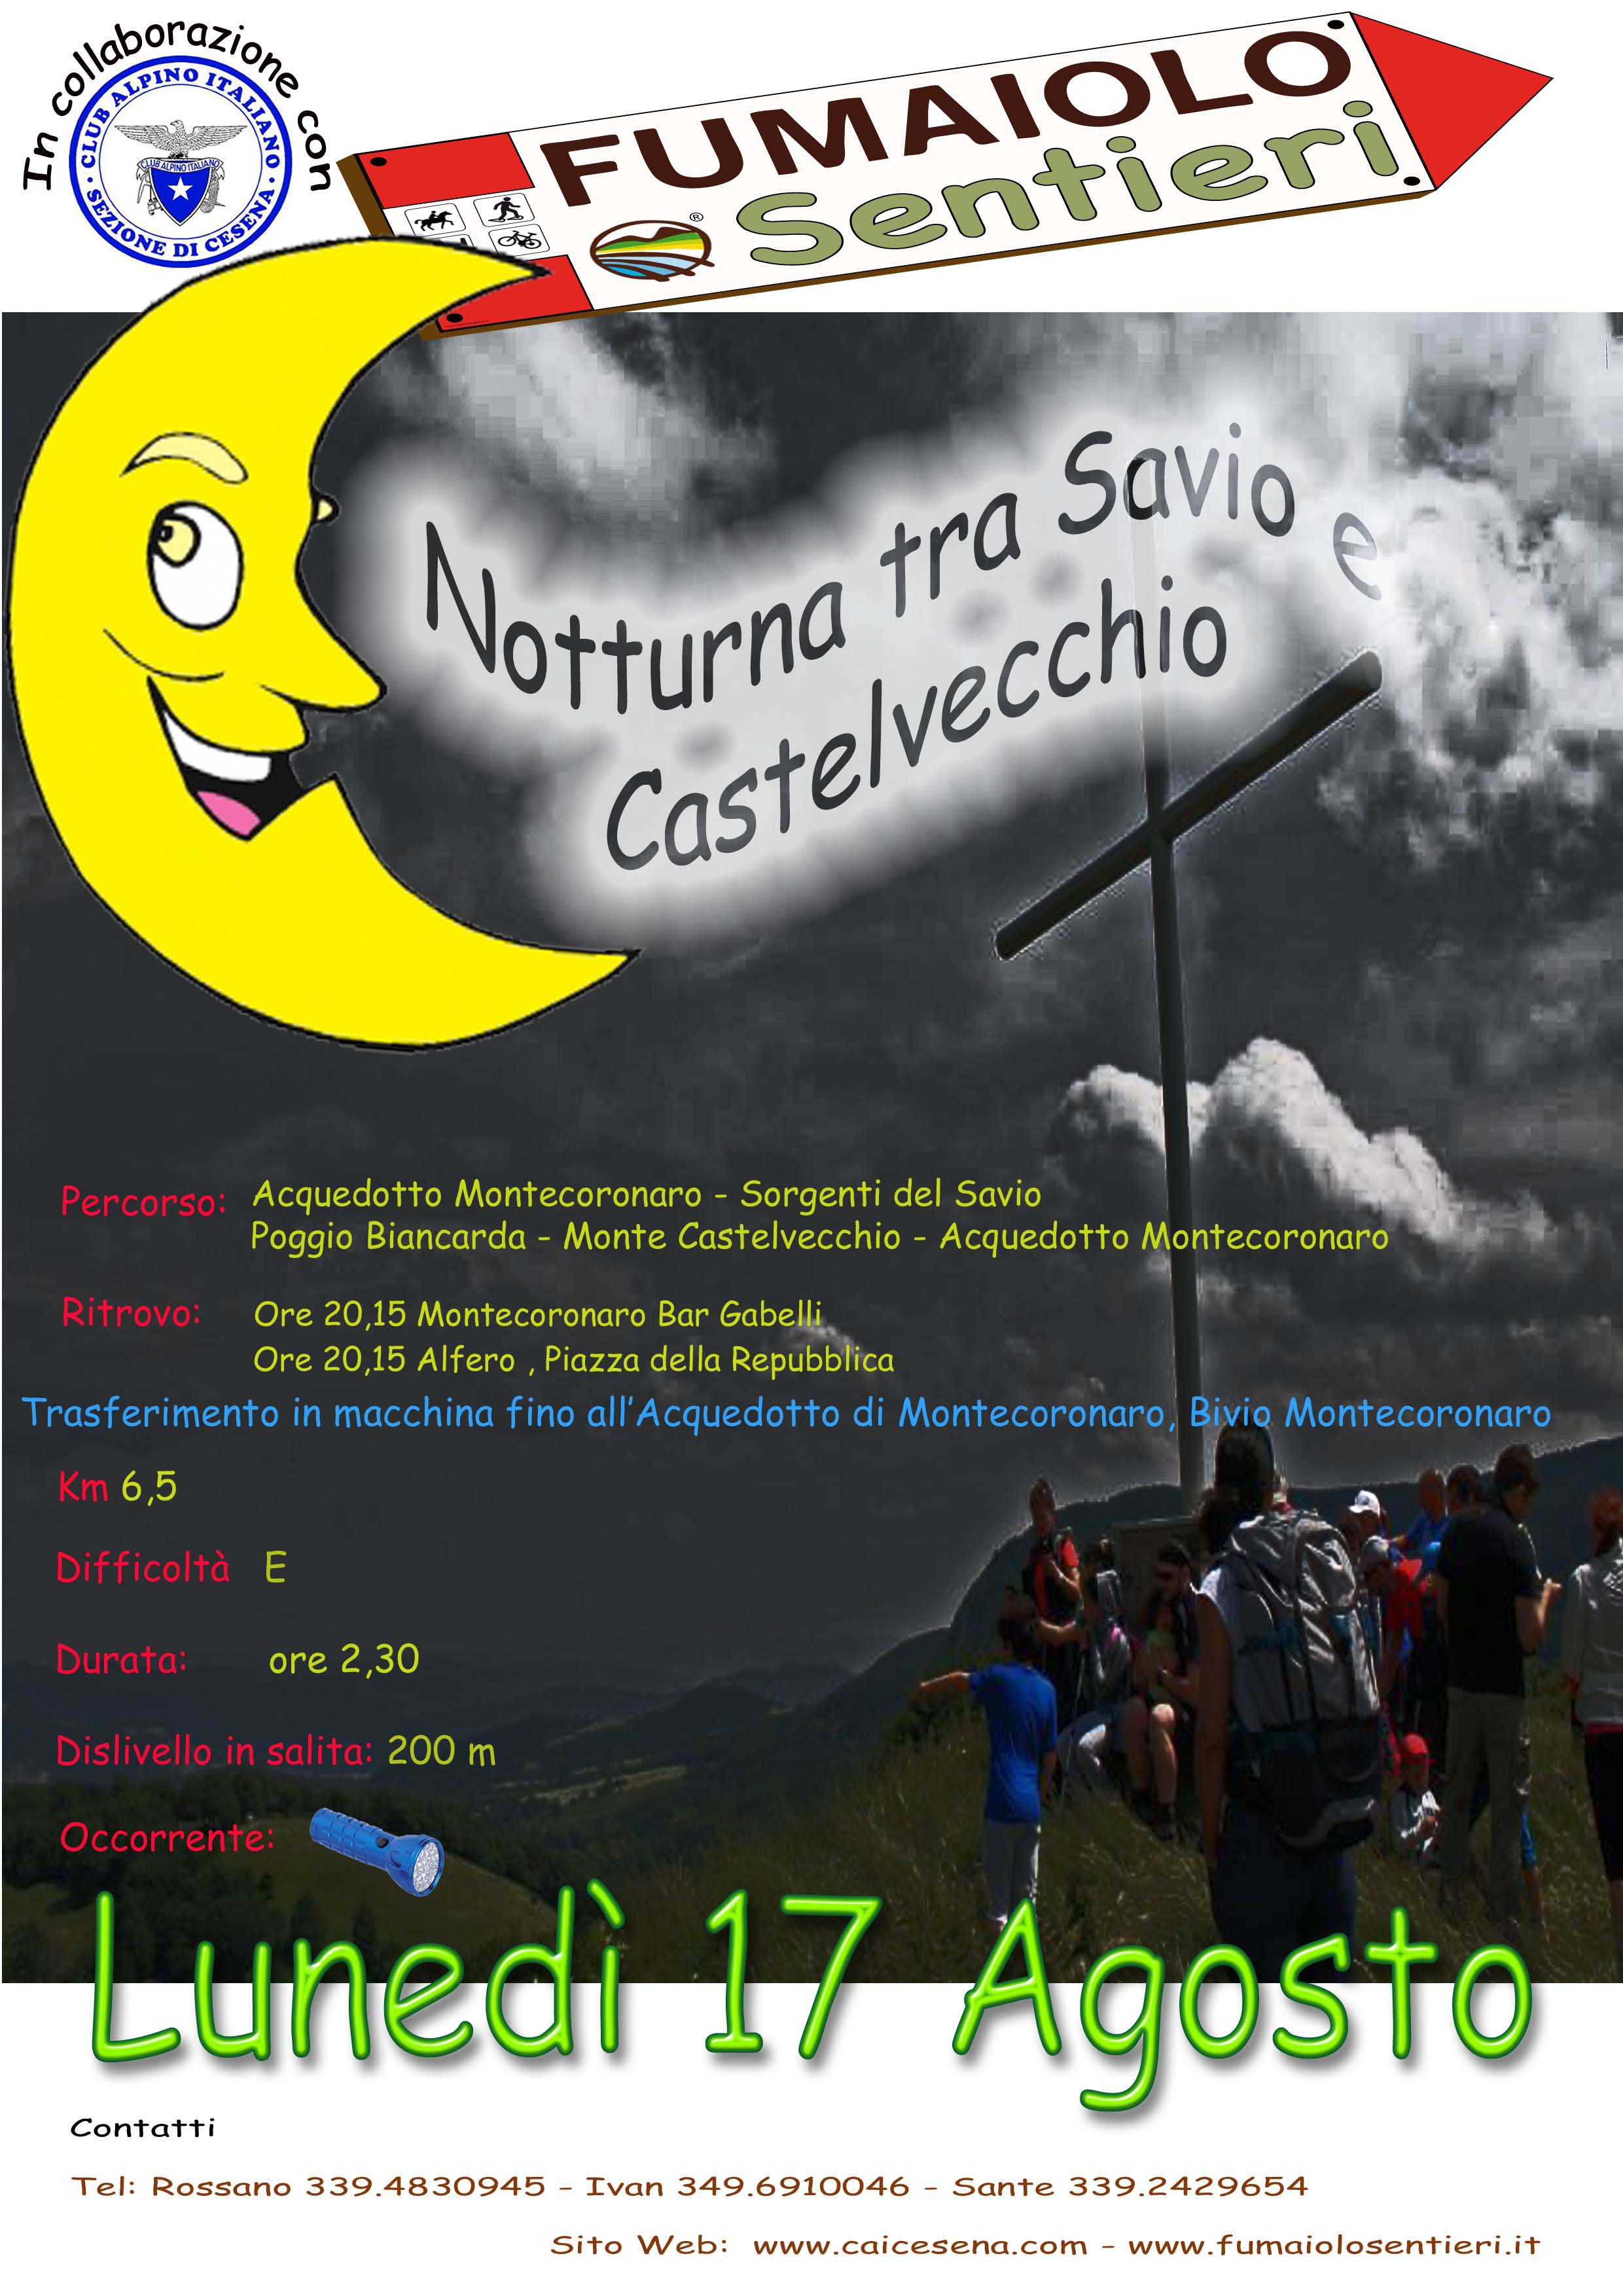 Notturna tra Savio e Castelvecchio